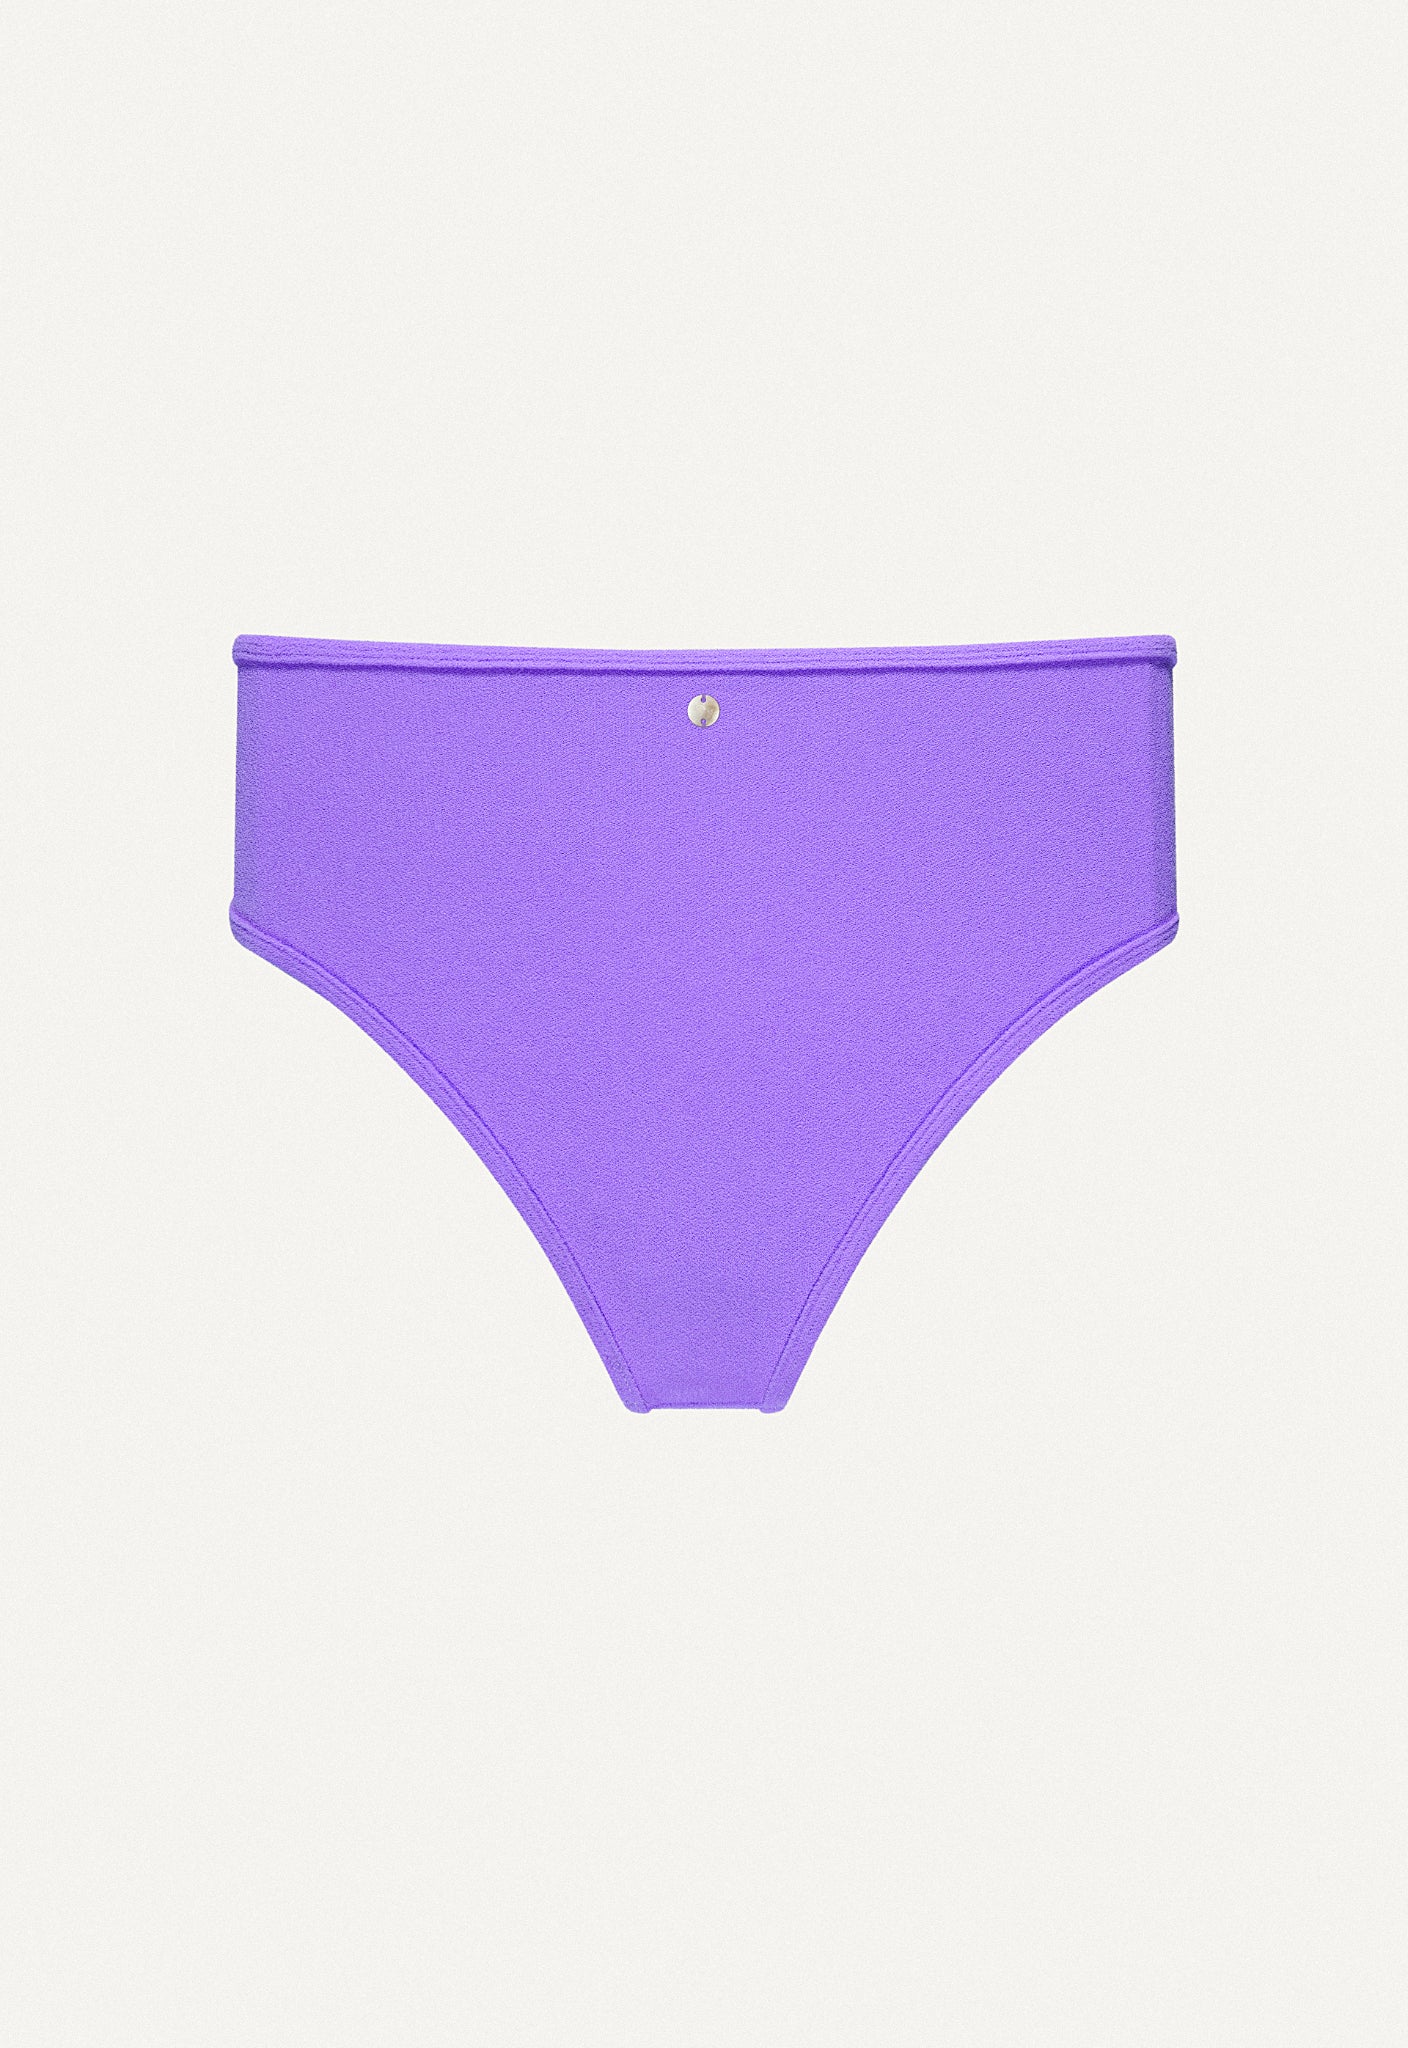 Bikini Bottom "Samun" in lilac terry